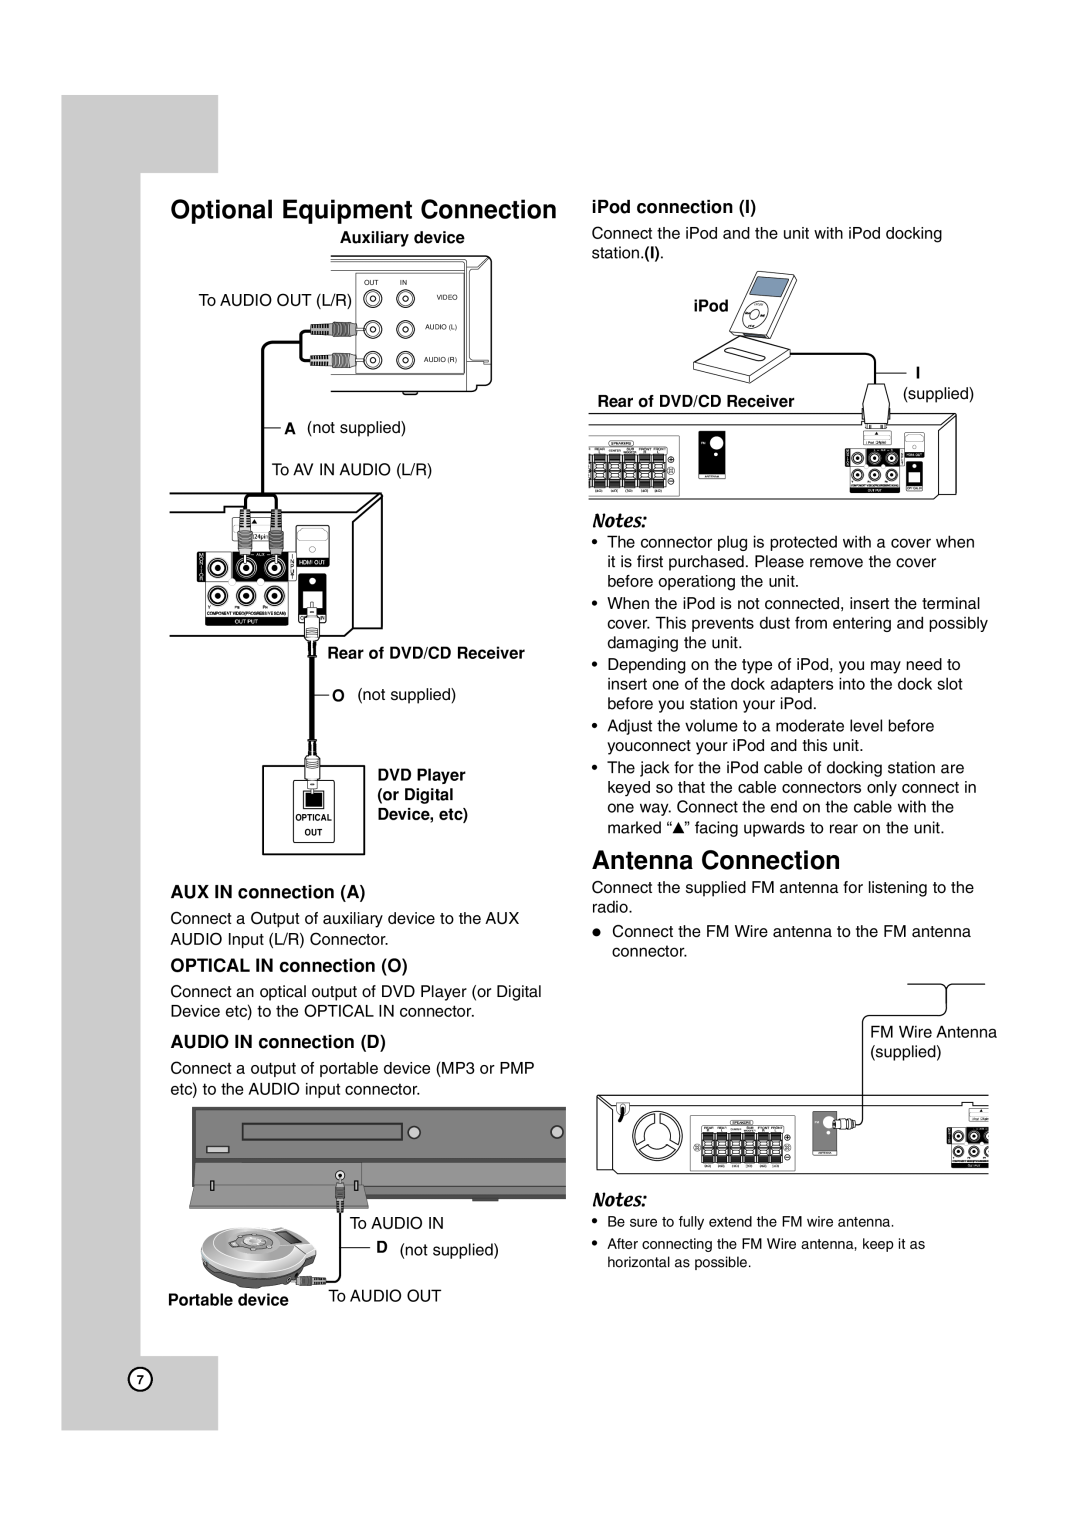 JVC TH-G40 Optional Equipment Connection, Antenna Connection, AUX IN connection A, OPTICAL IN connection O, DVD Player 